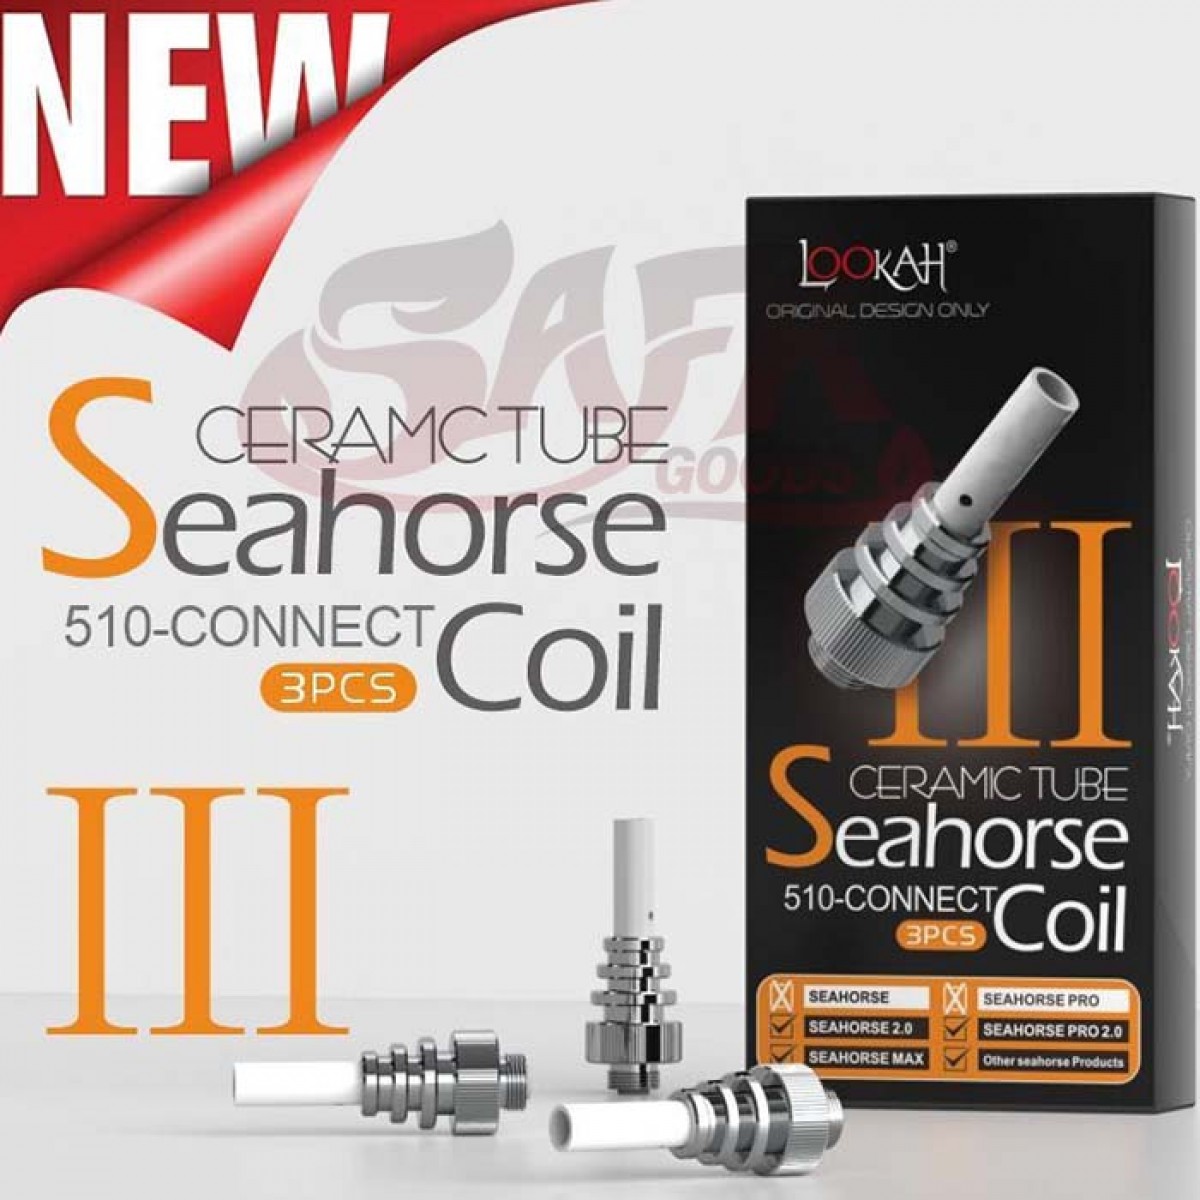 Lookah Seahorse Ceramic Tube Coils [Type III]